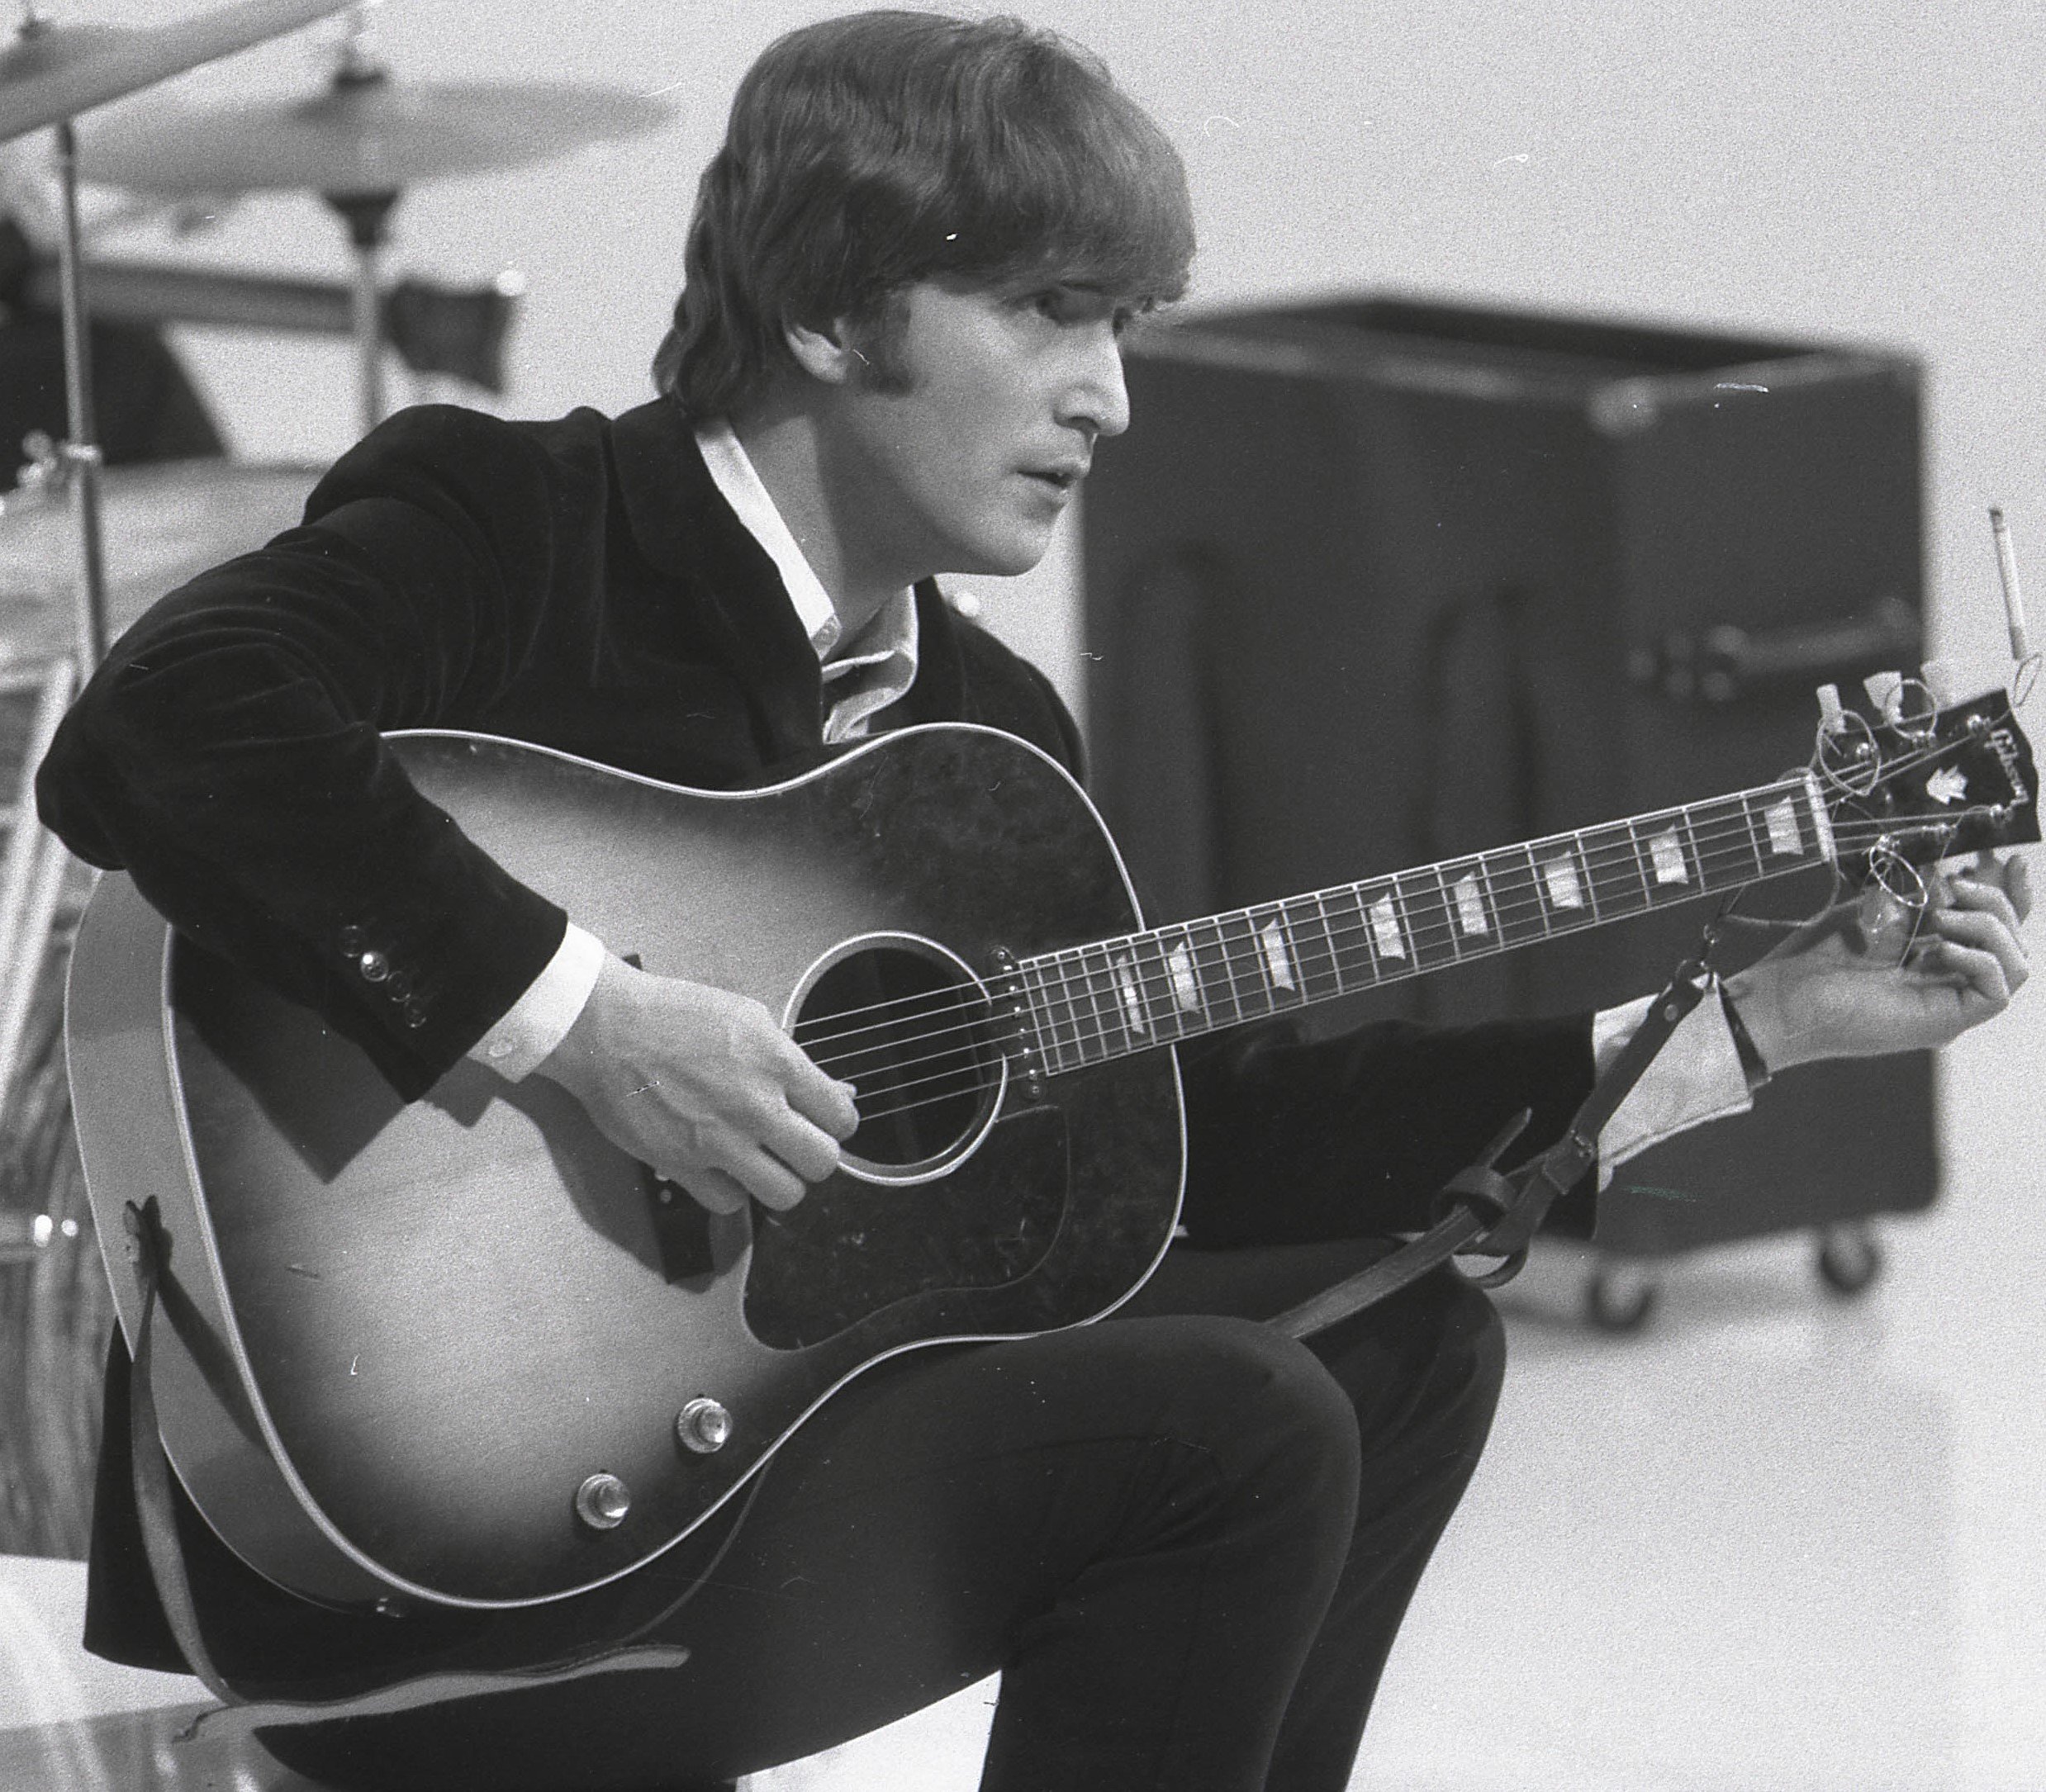 The Beatles' John Lennon holding a guitar